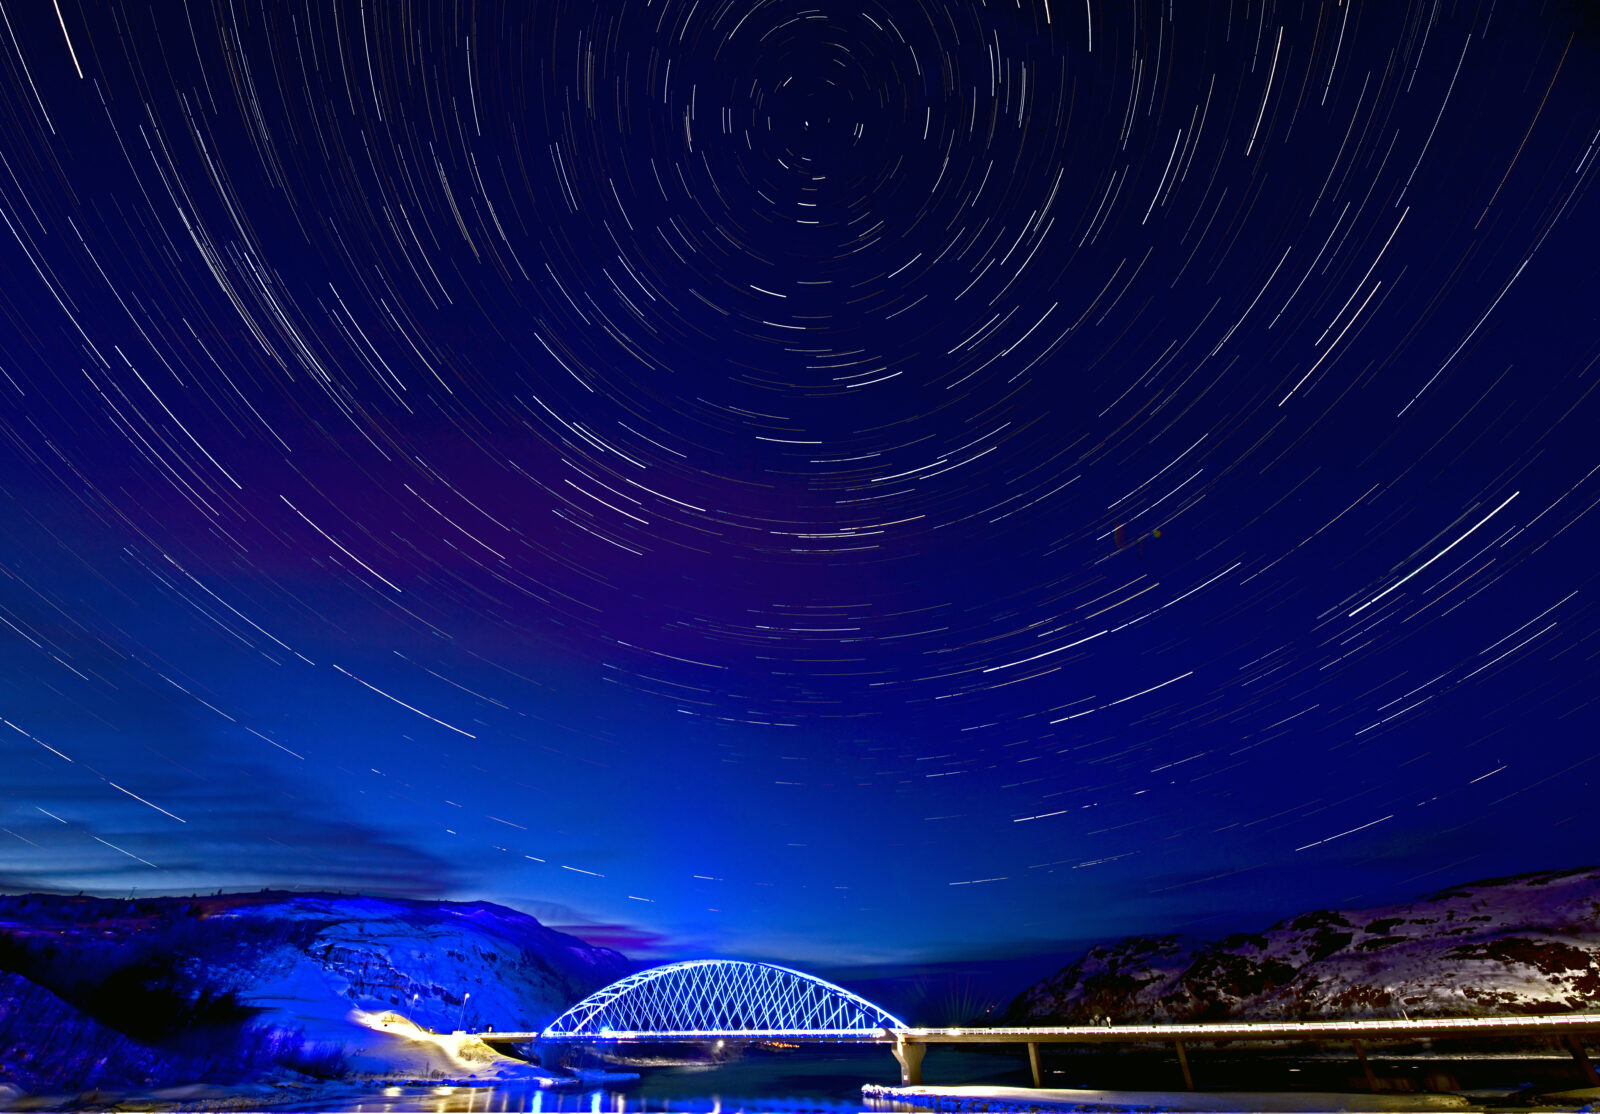 dark blue sky with stars and a small bridge